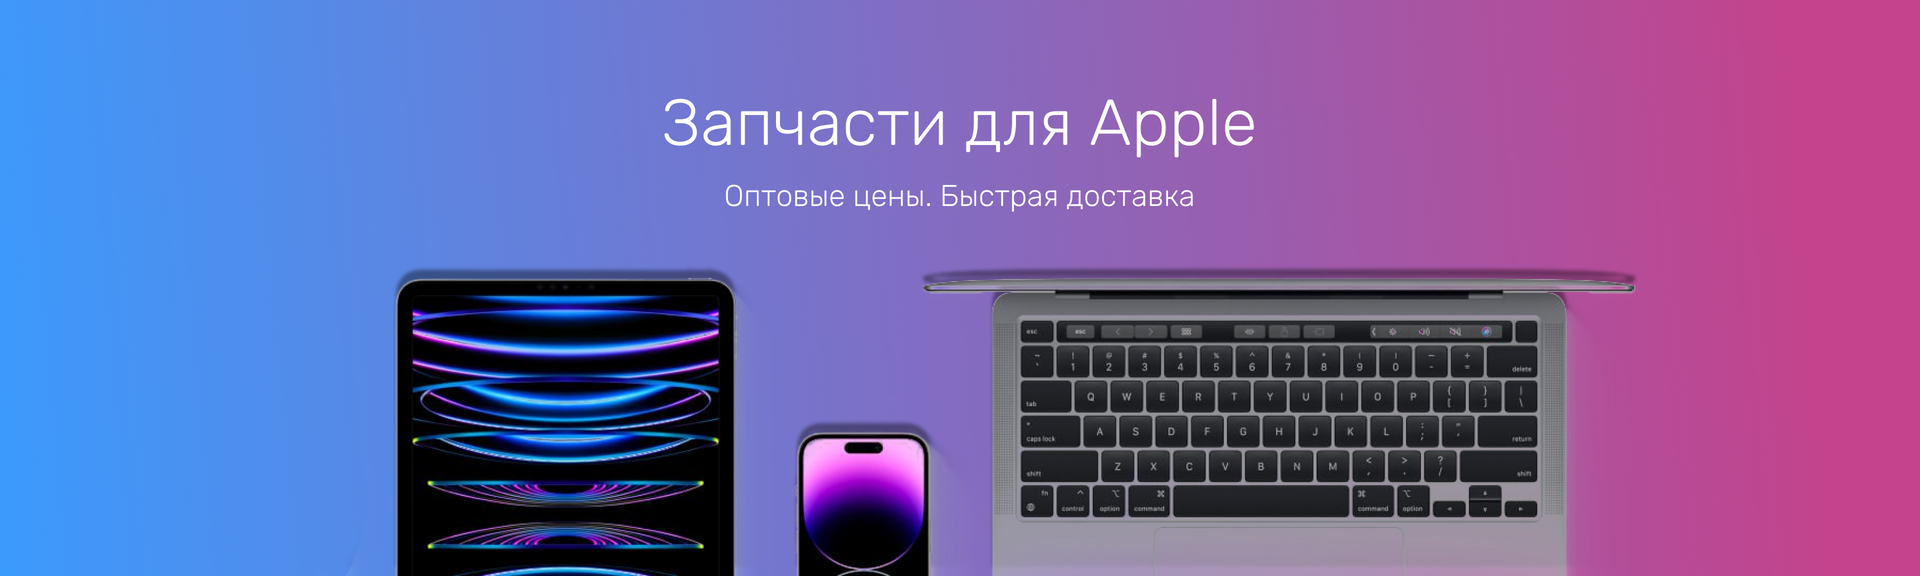 Интернет магазин icd.com.ua. Запчасти для техники apple